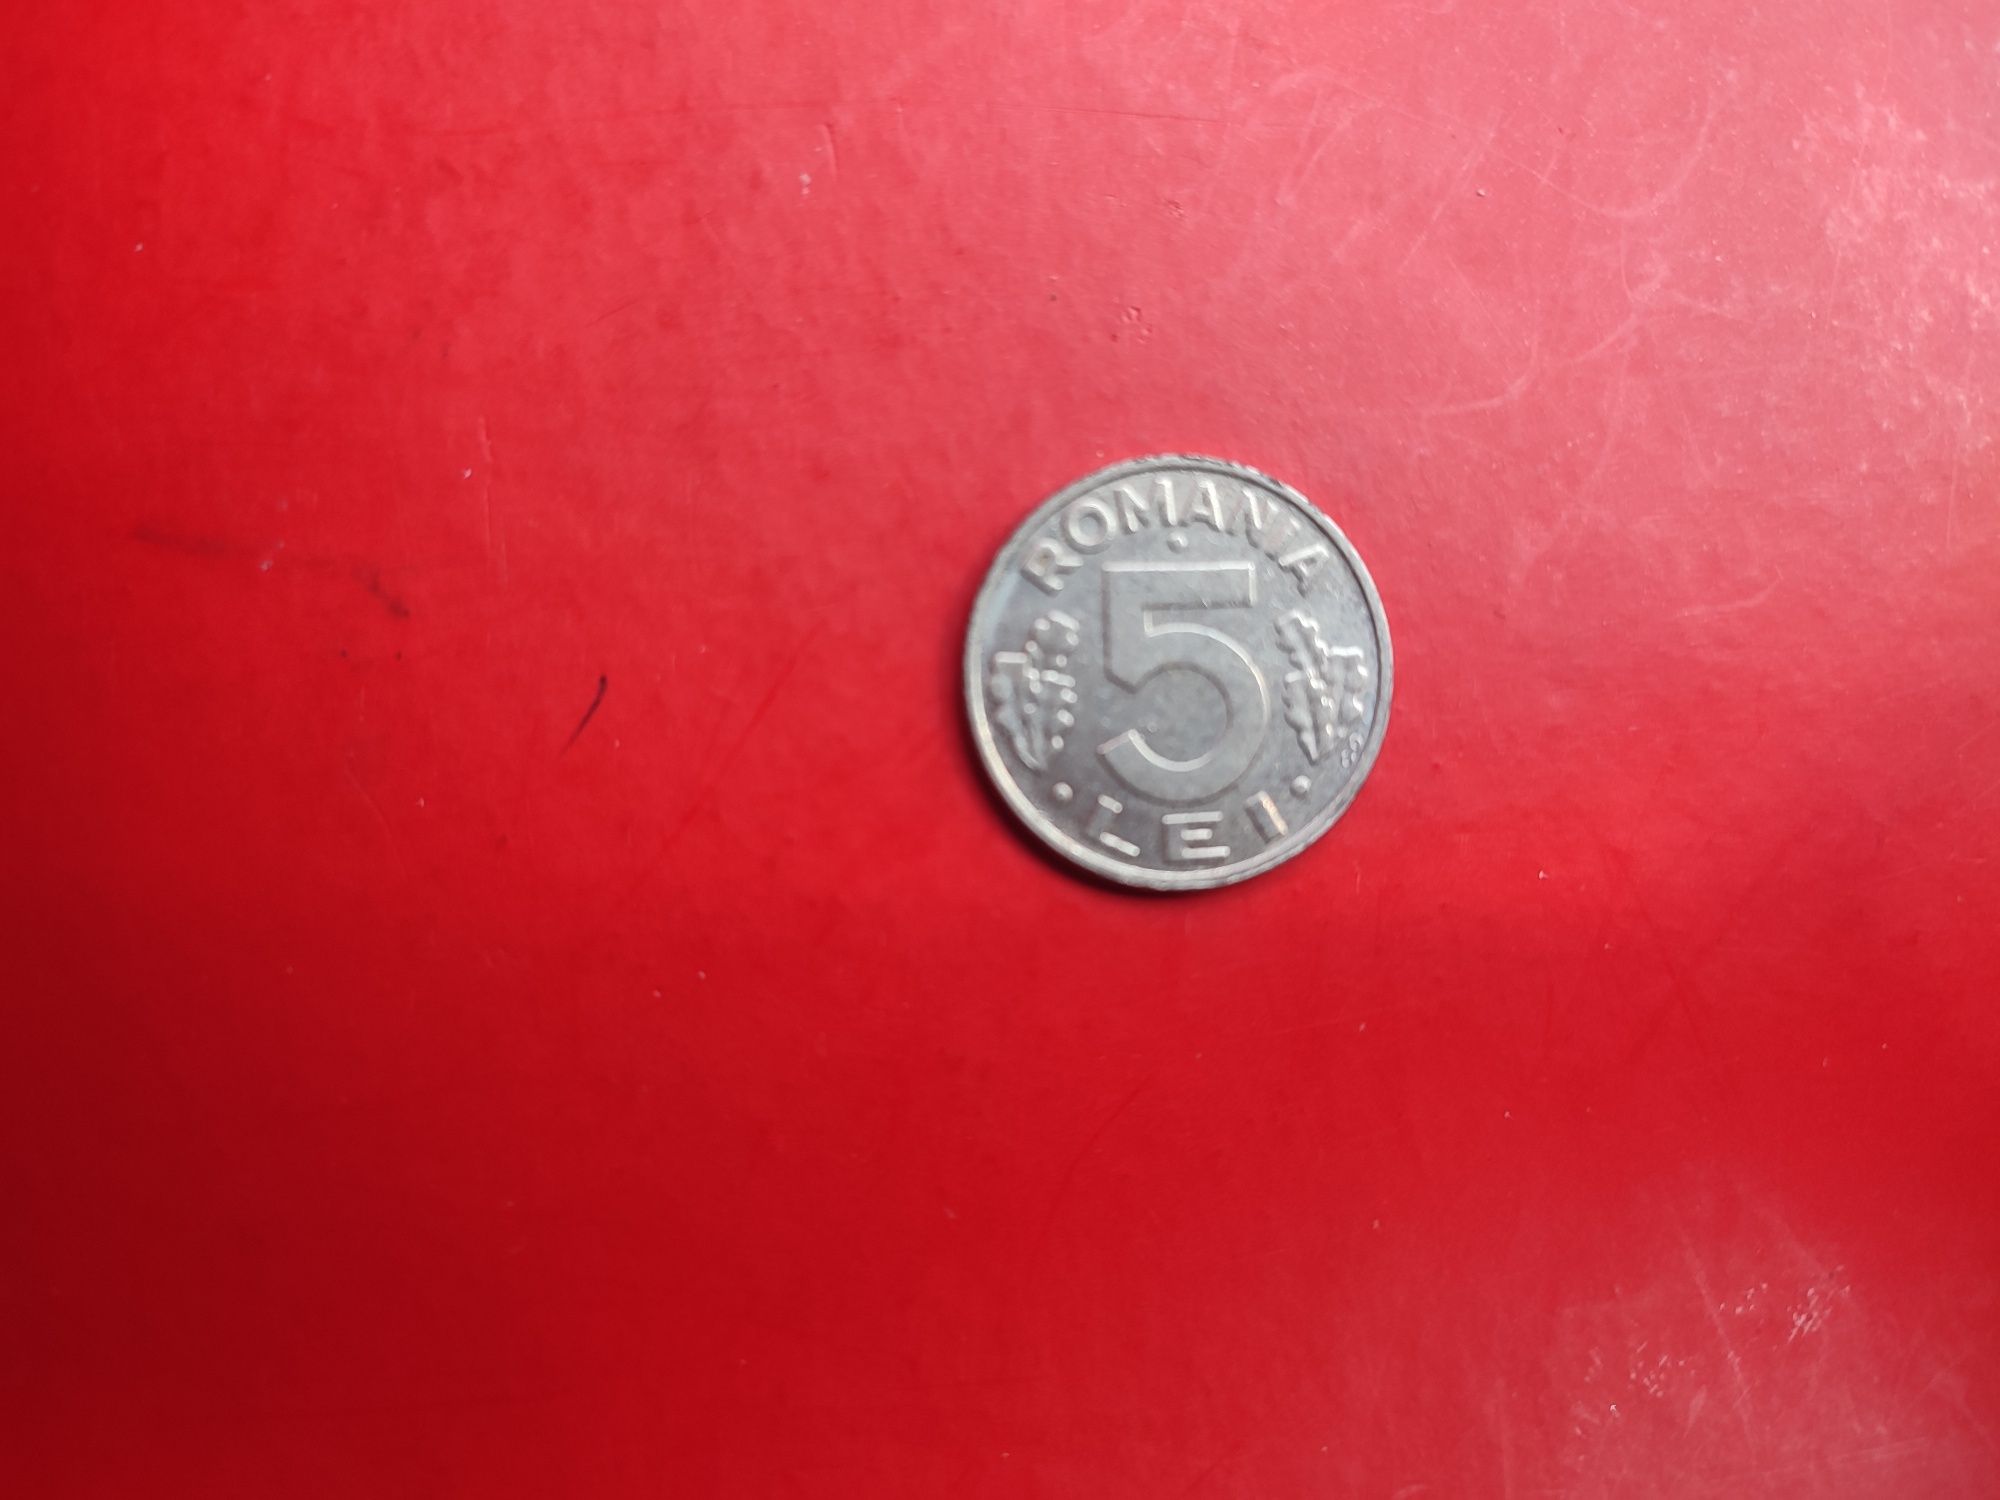 Vand doua monede de 1 leu si de 5 lei din anul 1993